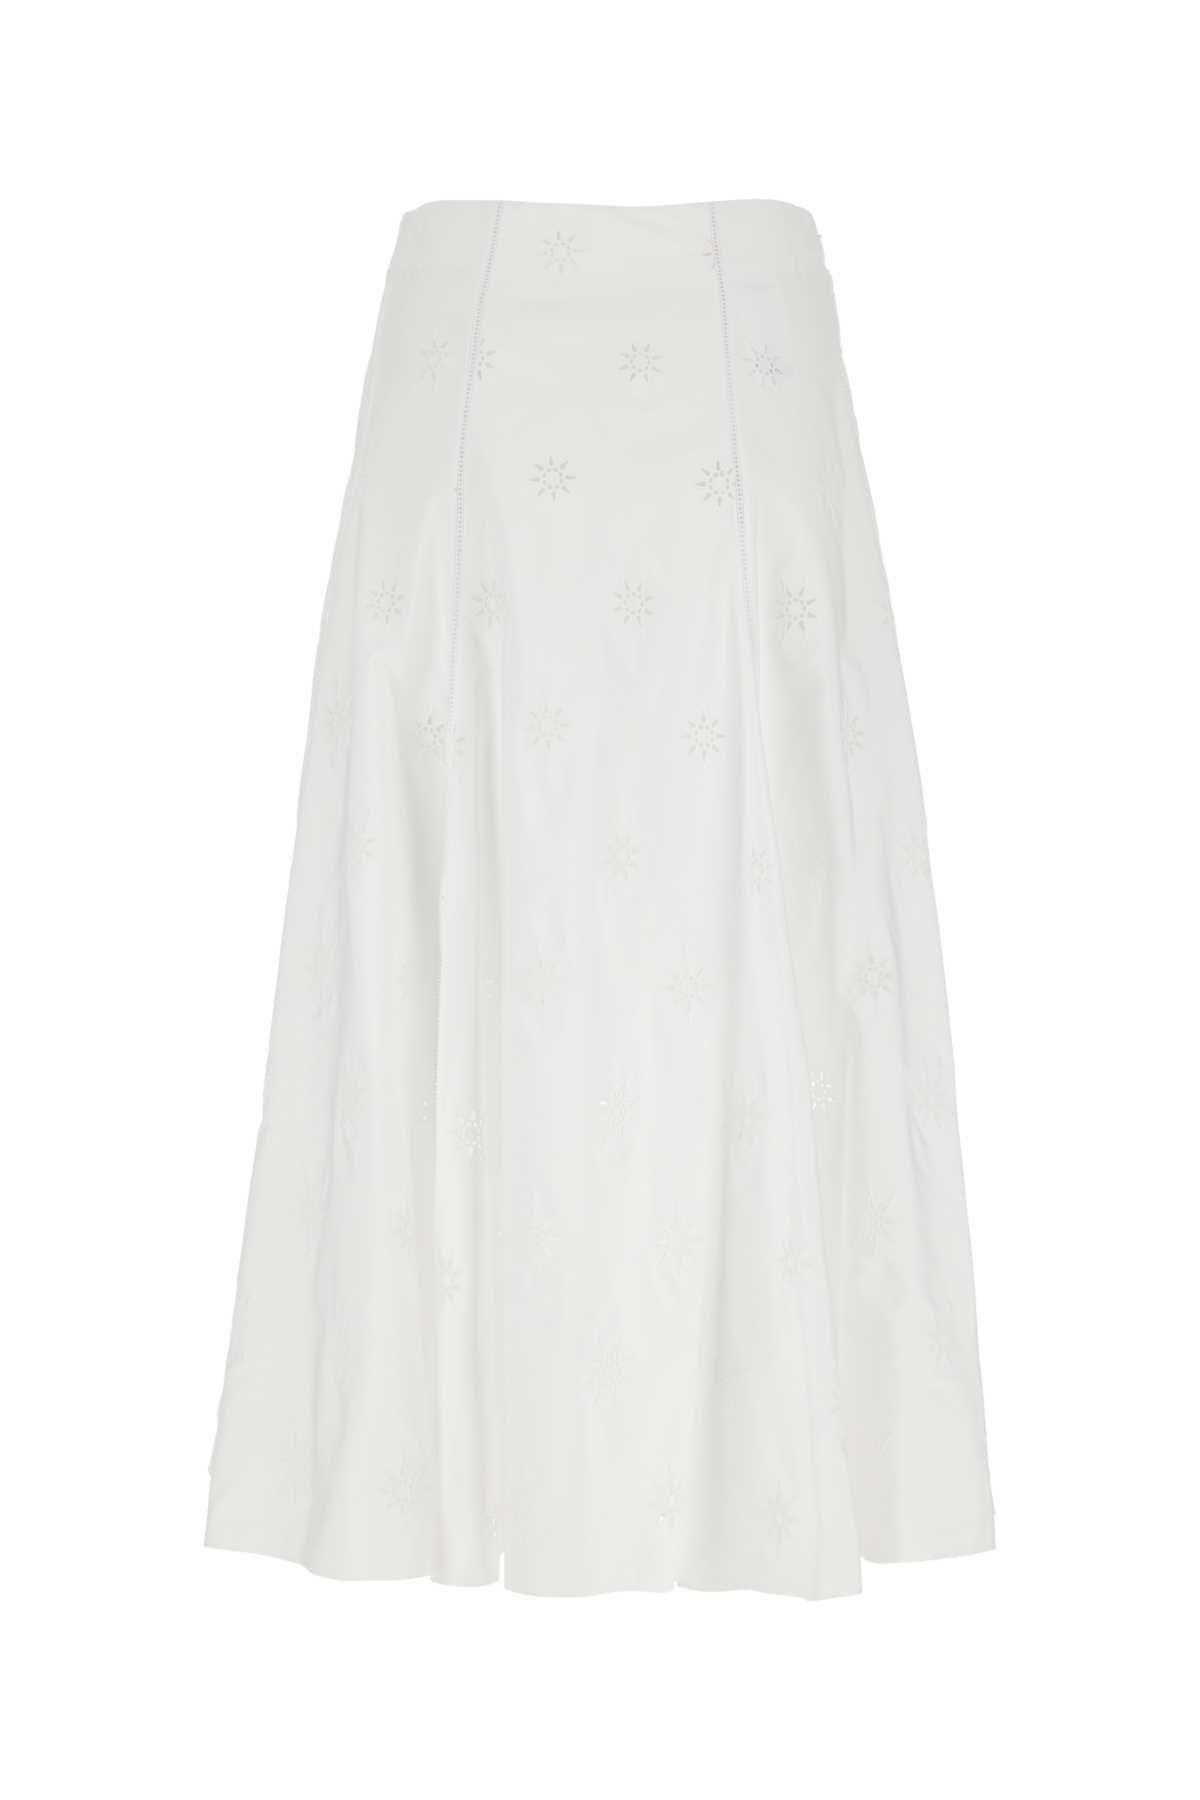 Chloé White Poplin Skirt In 101